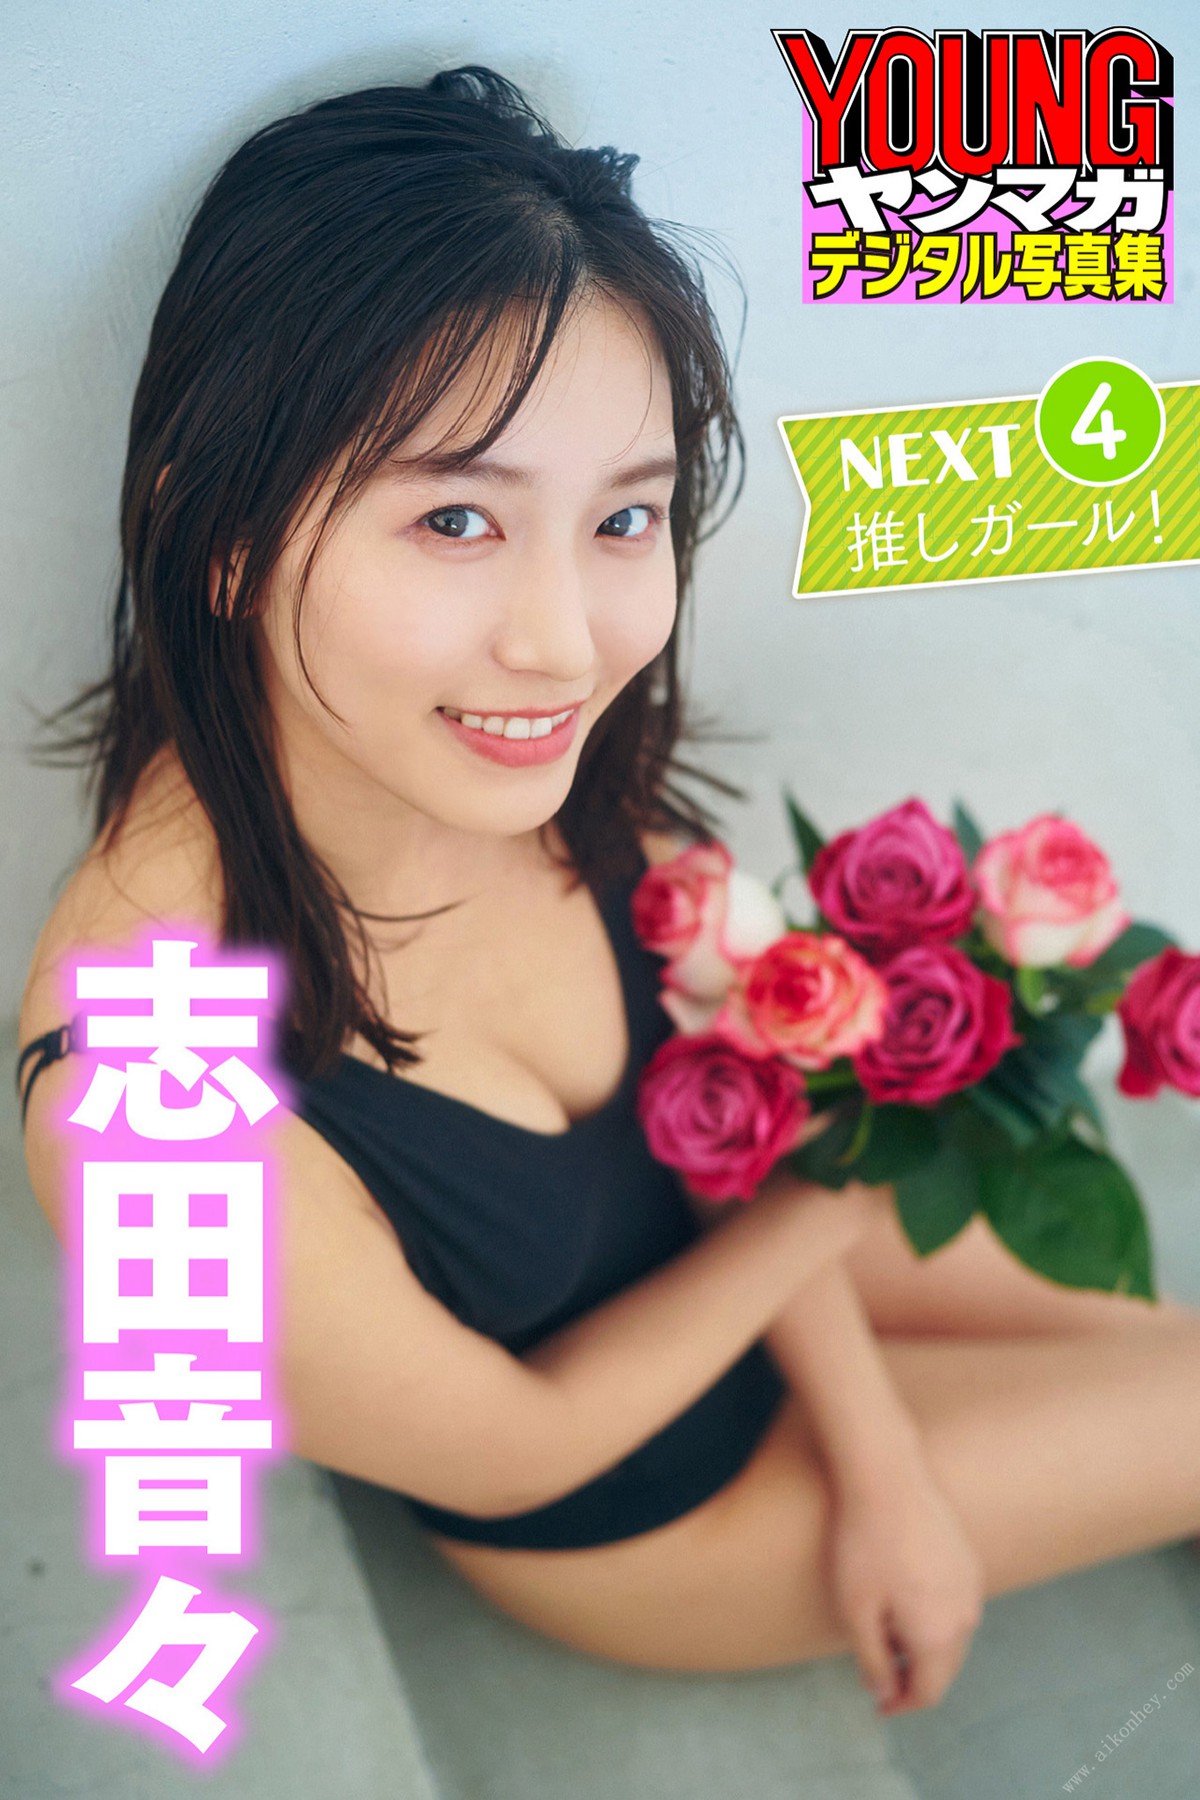 Young Magazine Photobook 2022-09-16 Nene Shida 志田音々 – Next Oshi Girl 1-4 Next Part 4